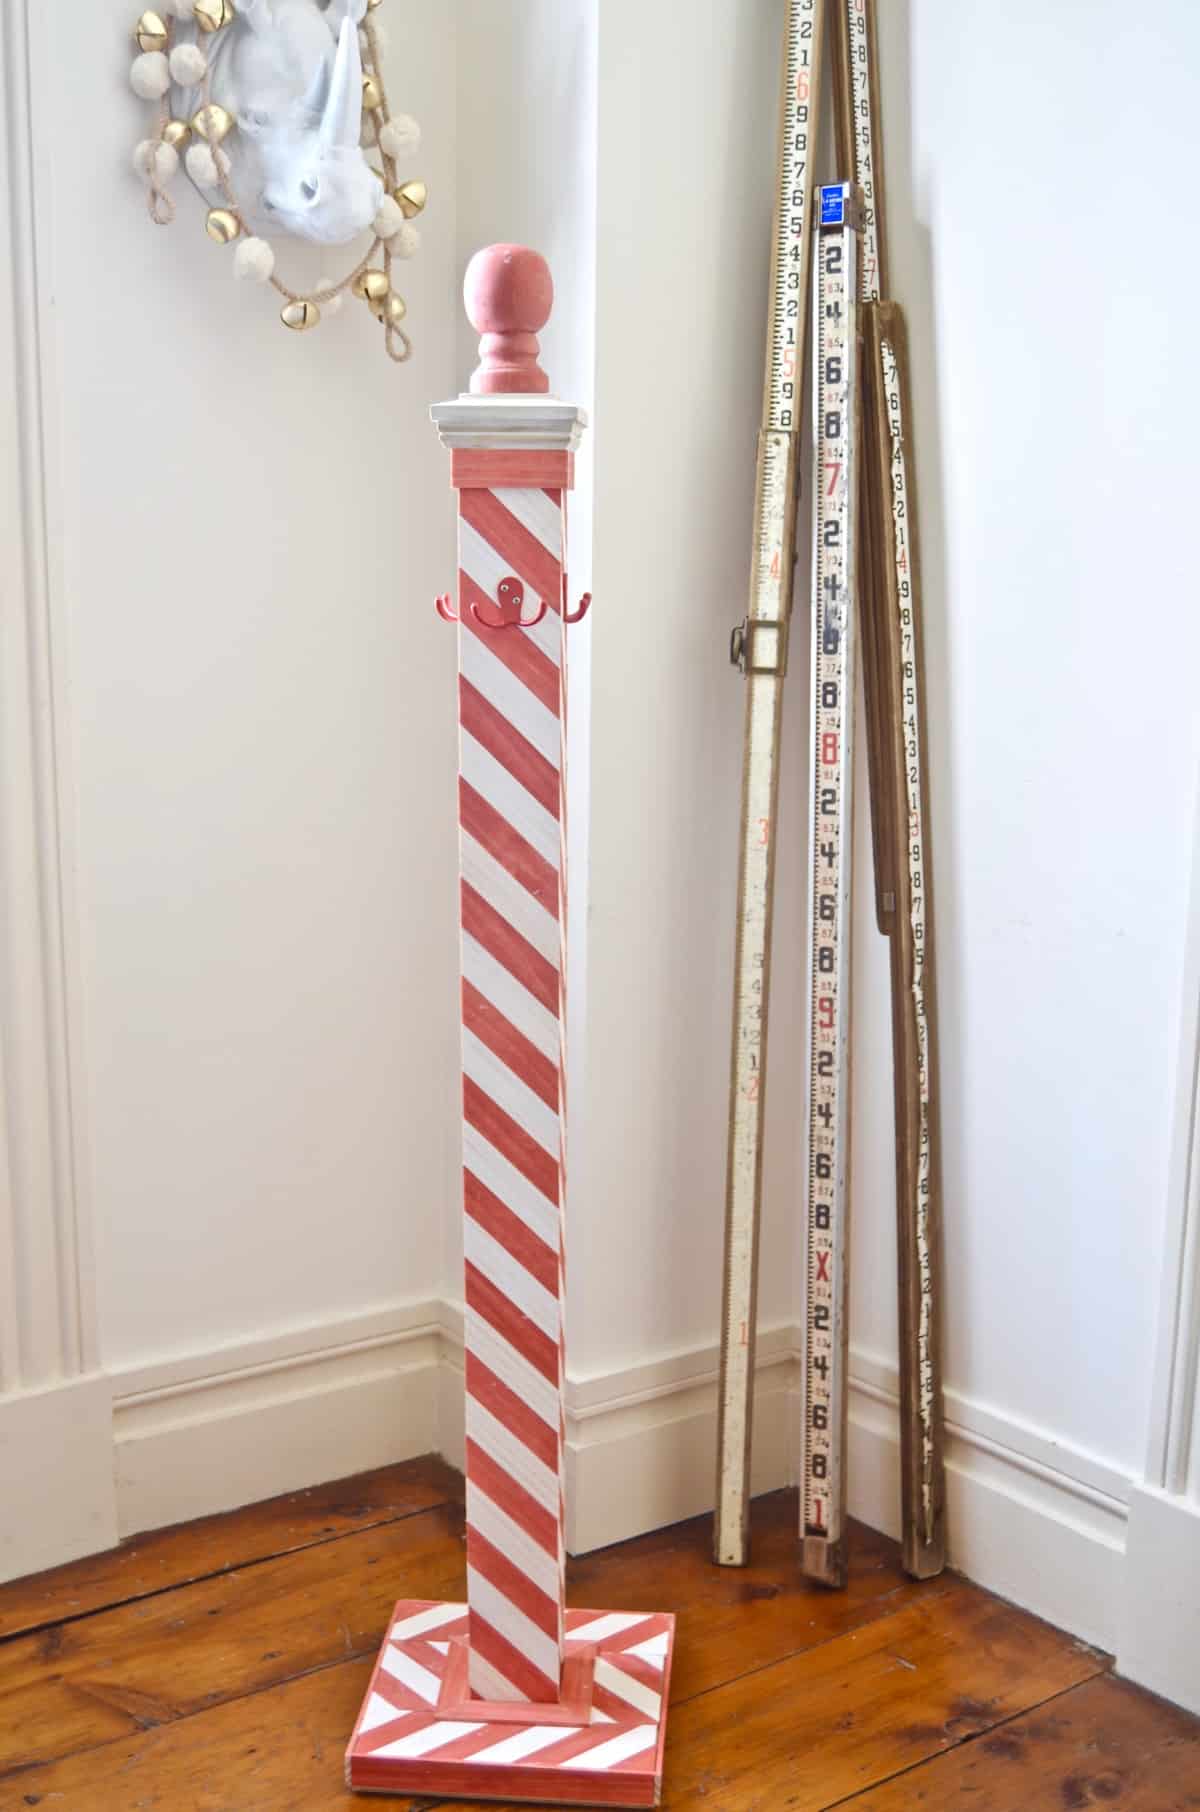 DIY striped lattice holiday stocking post- adorable way to display your stockings this season!